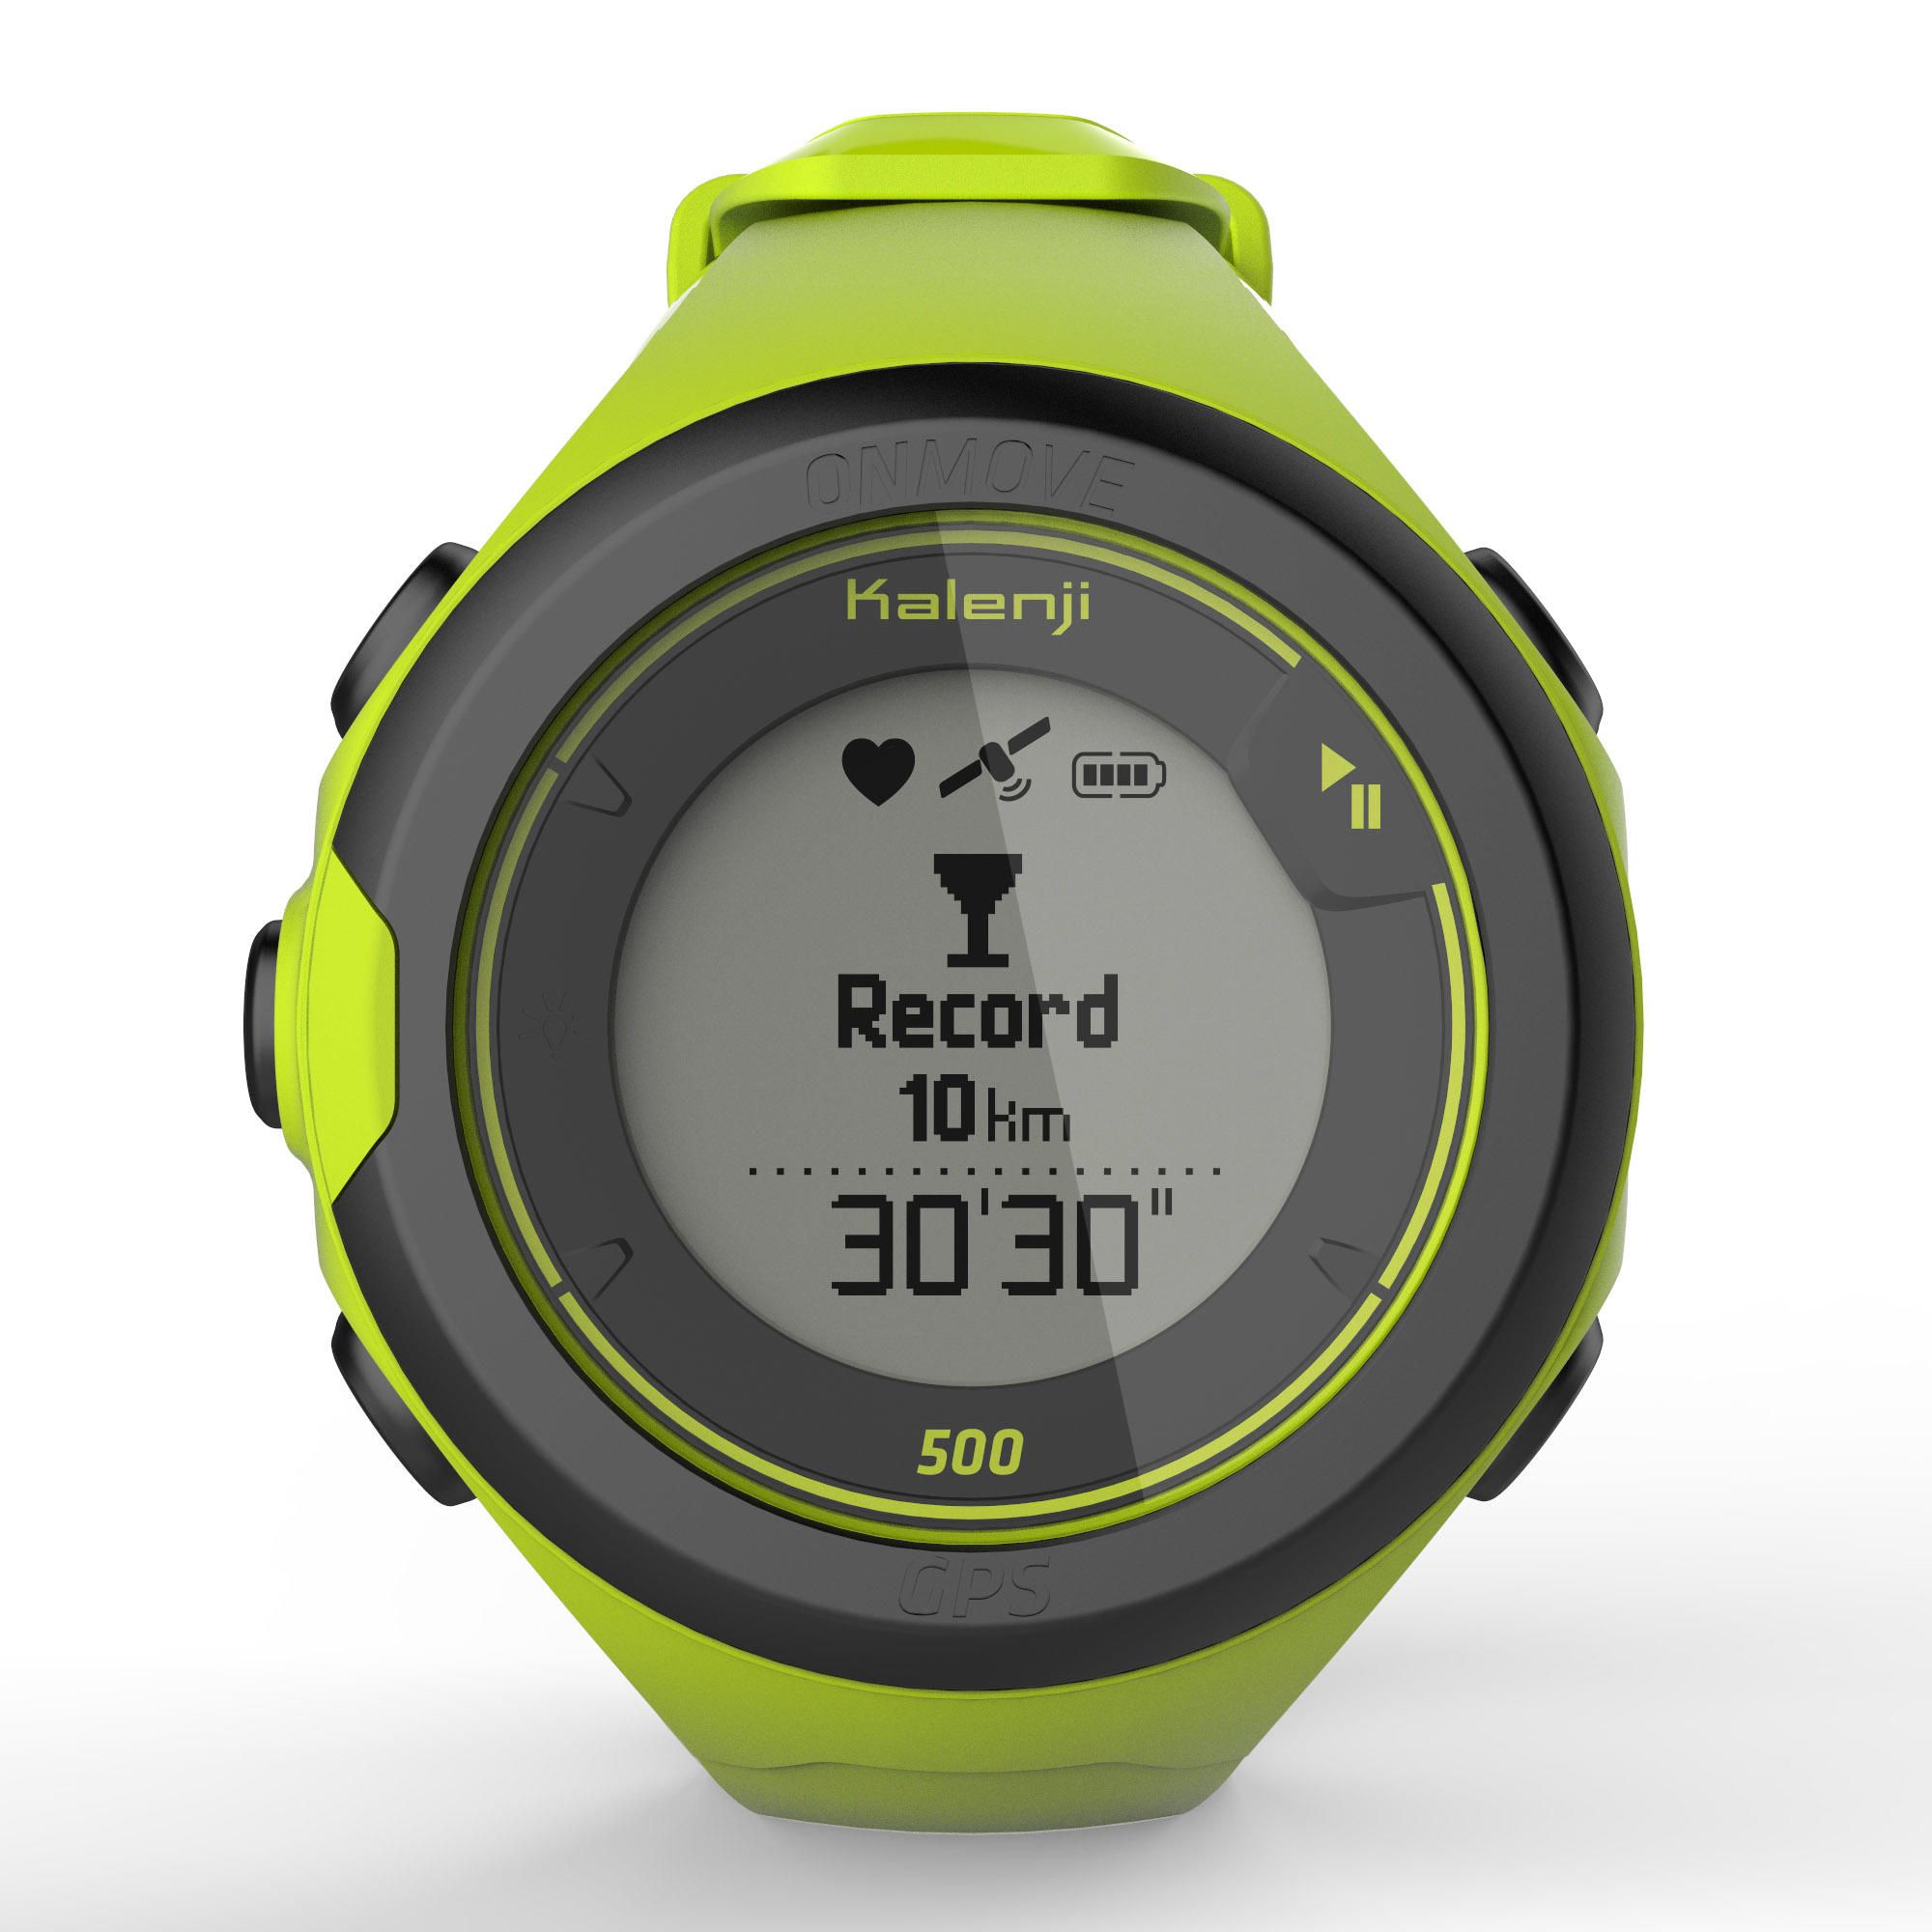 ONmove 500 GPS running watch and wrist heart rate monitor - yellow 9/17